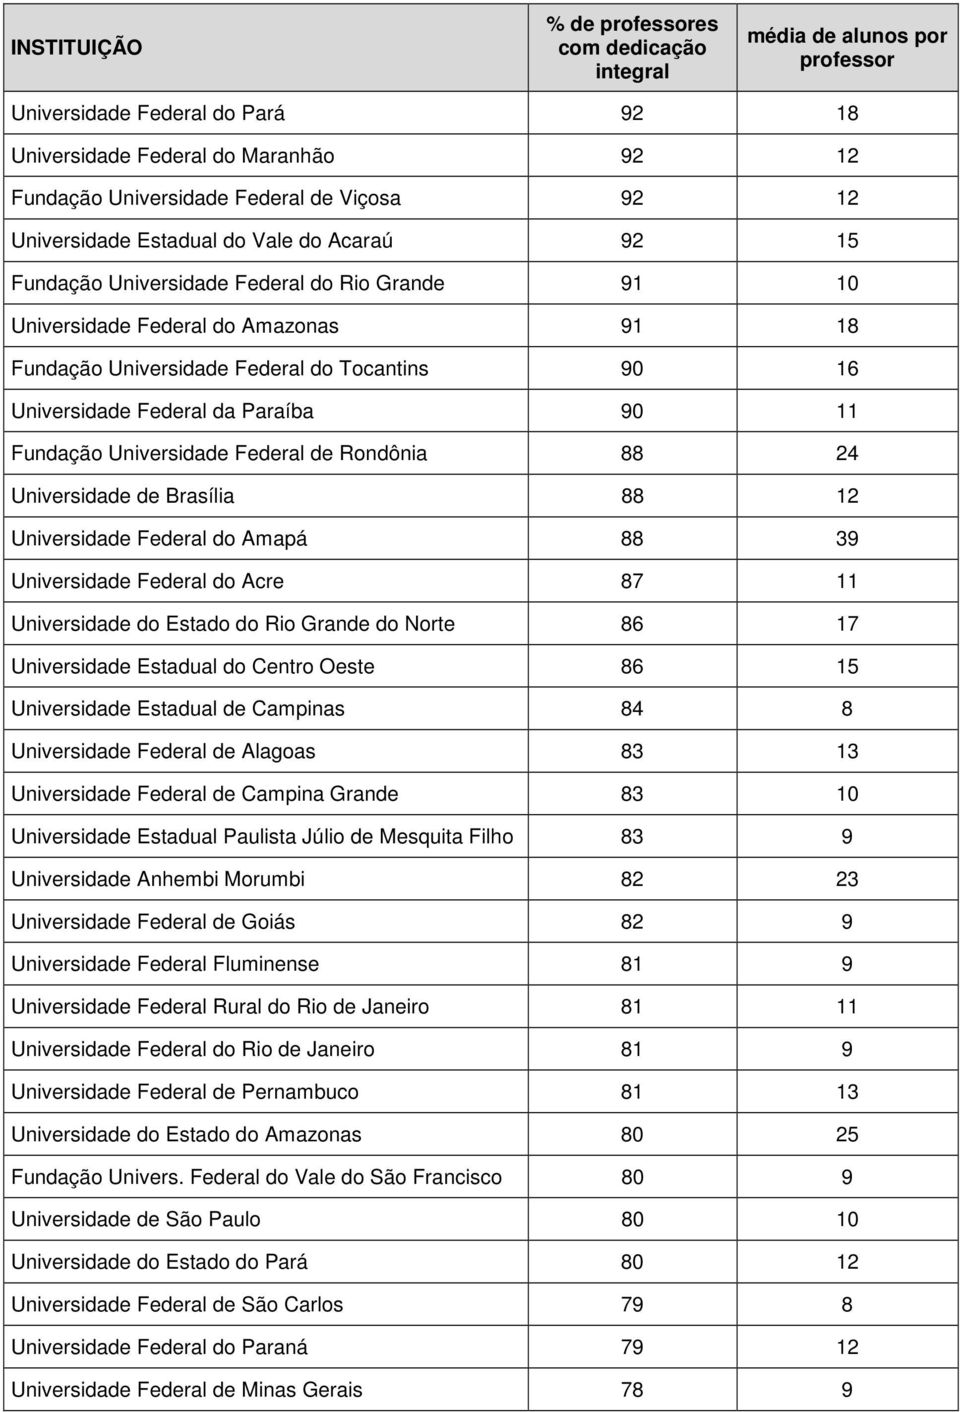 24 Universidade de Brasília 88 12 Universidade Federal do Amapá 88 39 Universidade Federal do Acre 87 11 Universidade do Estado do Rio Grande do Norte 86 17 Universidade Estadual do Centro Oeste 86